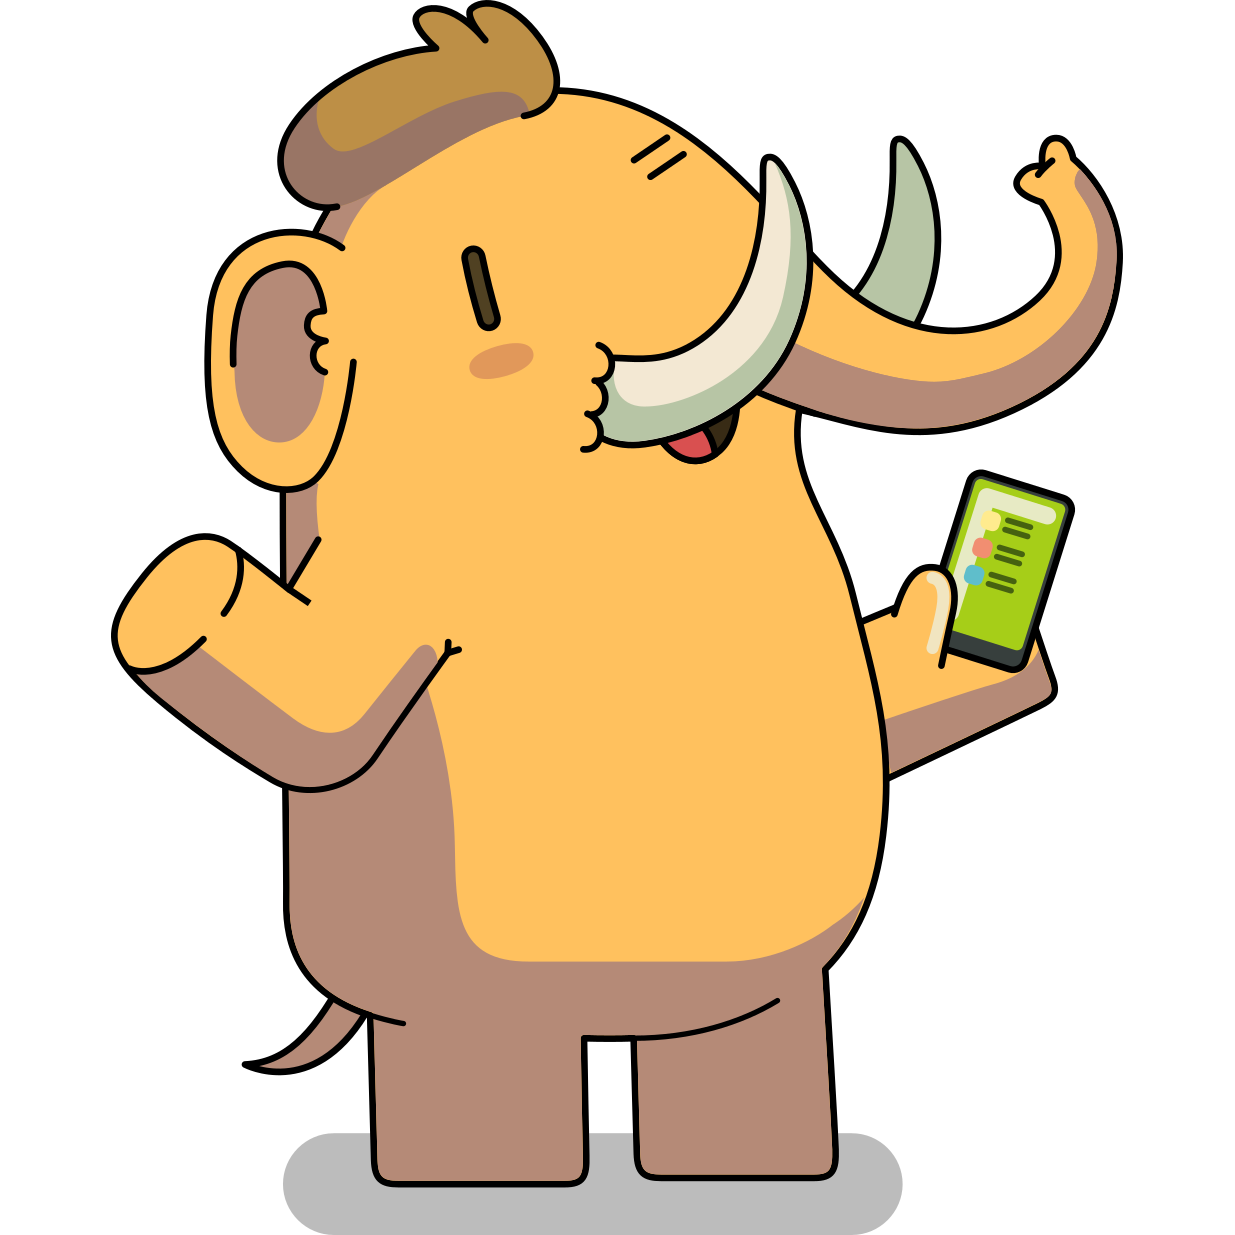 A cute mastodon holding up a smartphone.